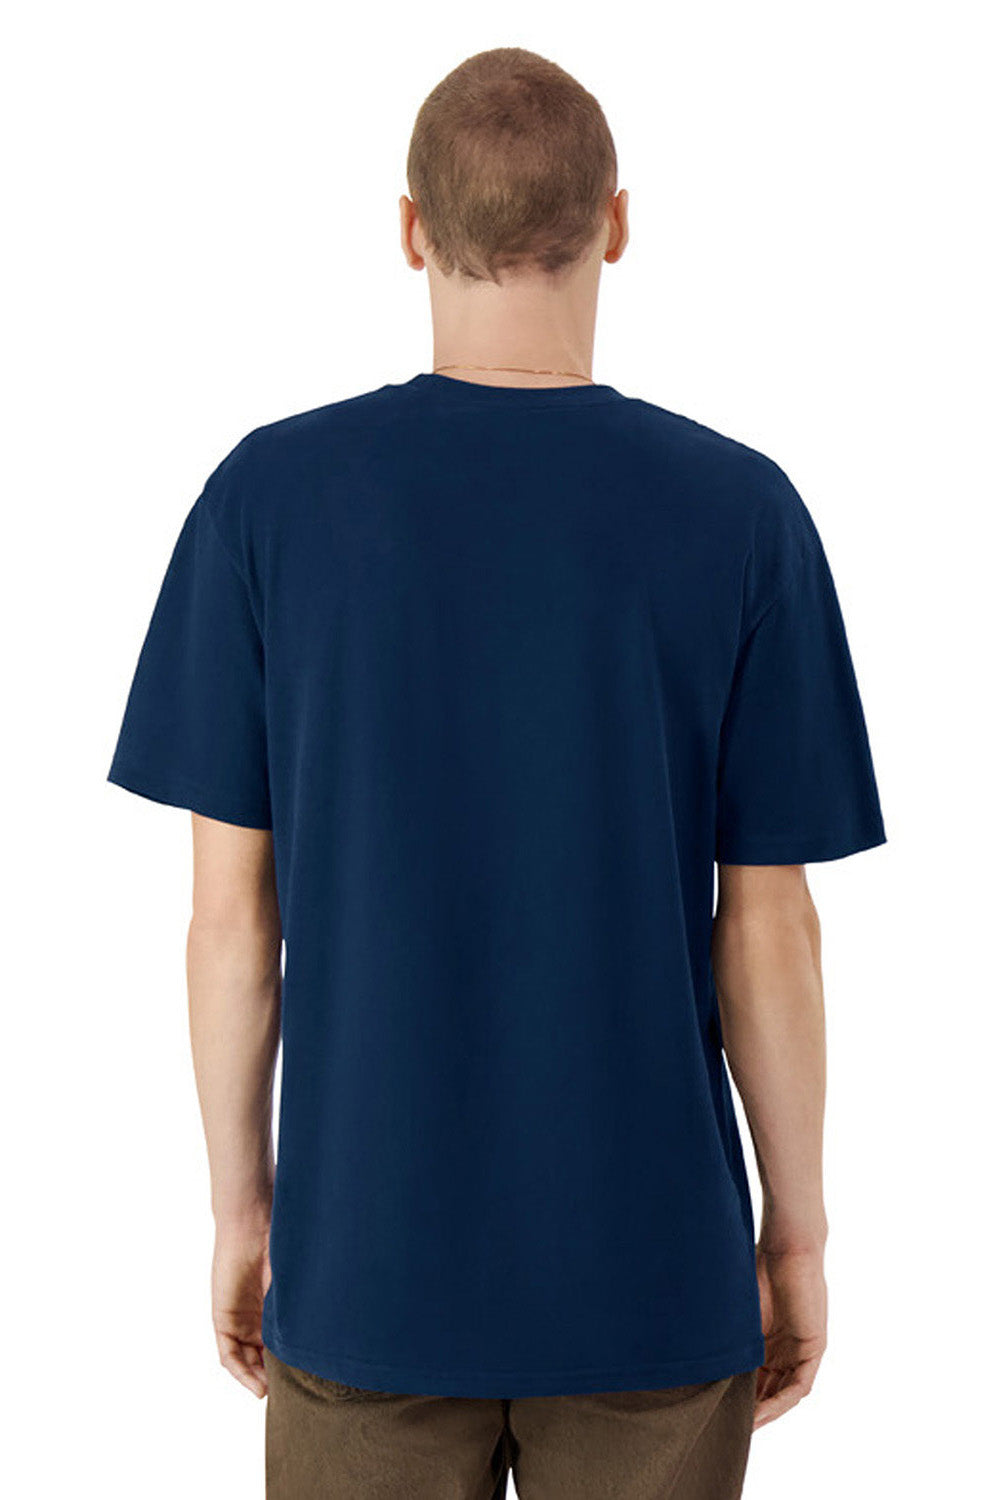 American Apparel 5389 Mens Sueded Cloud Short Sleeve Crewneck T-Shirt Navy Blue Model Back